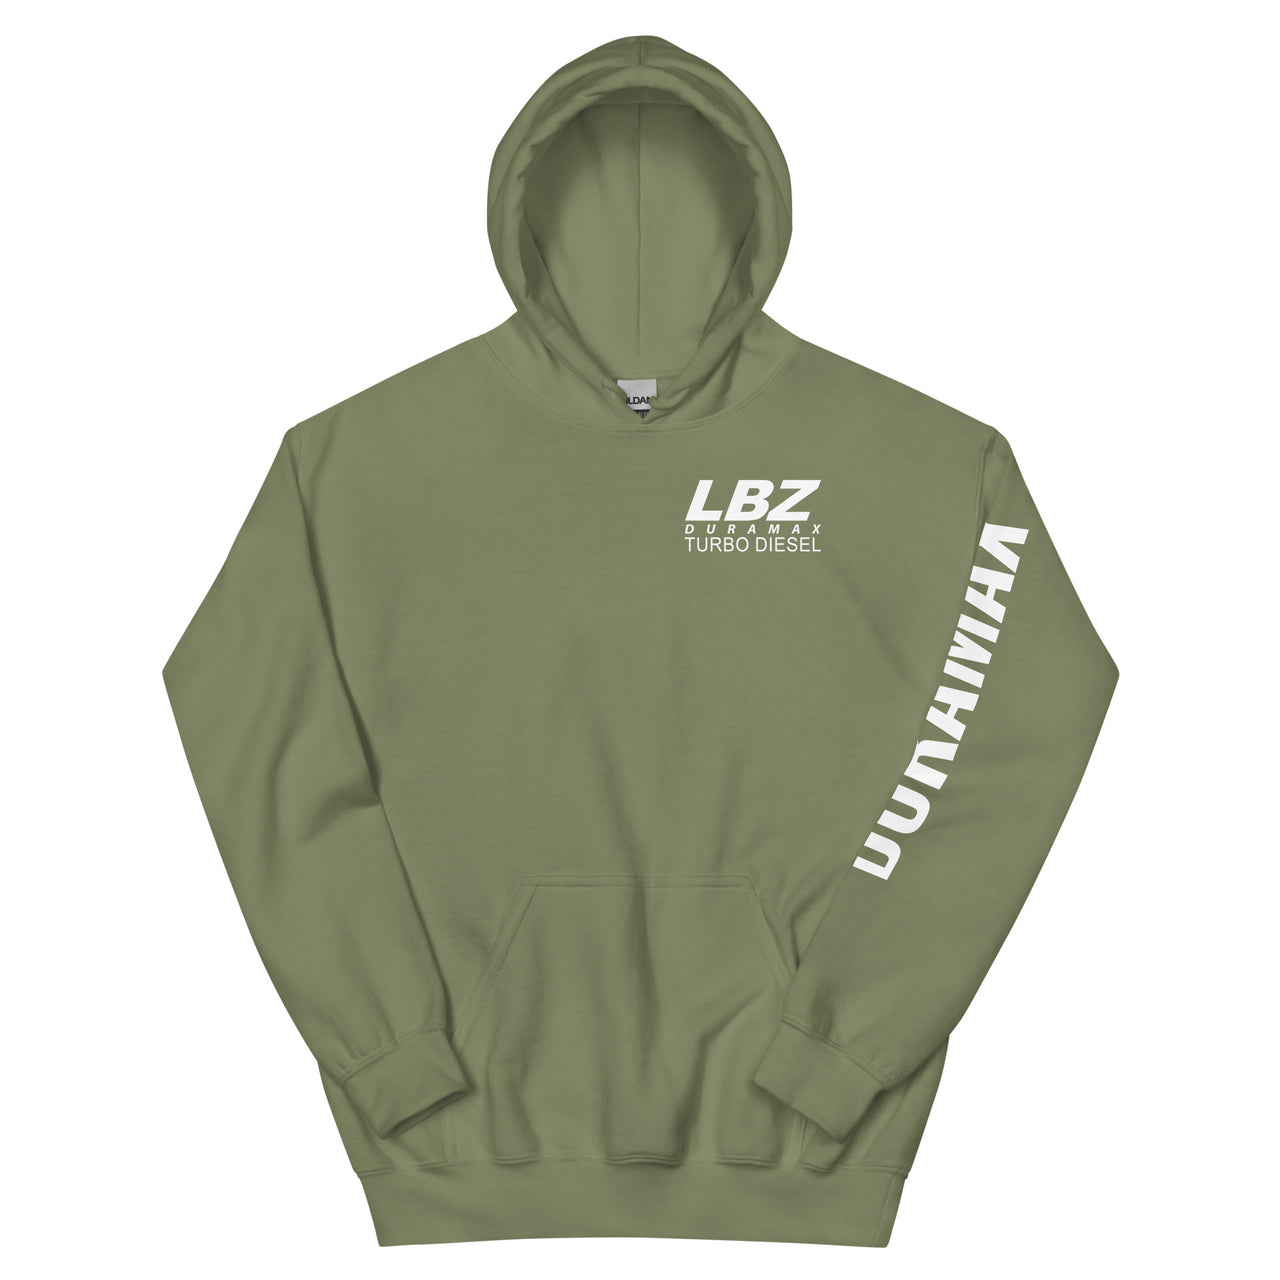 LBZ Duramax Hoodie Pullover Sweatshirt With Sleeve Print in green